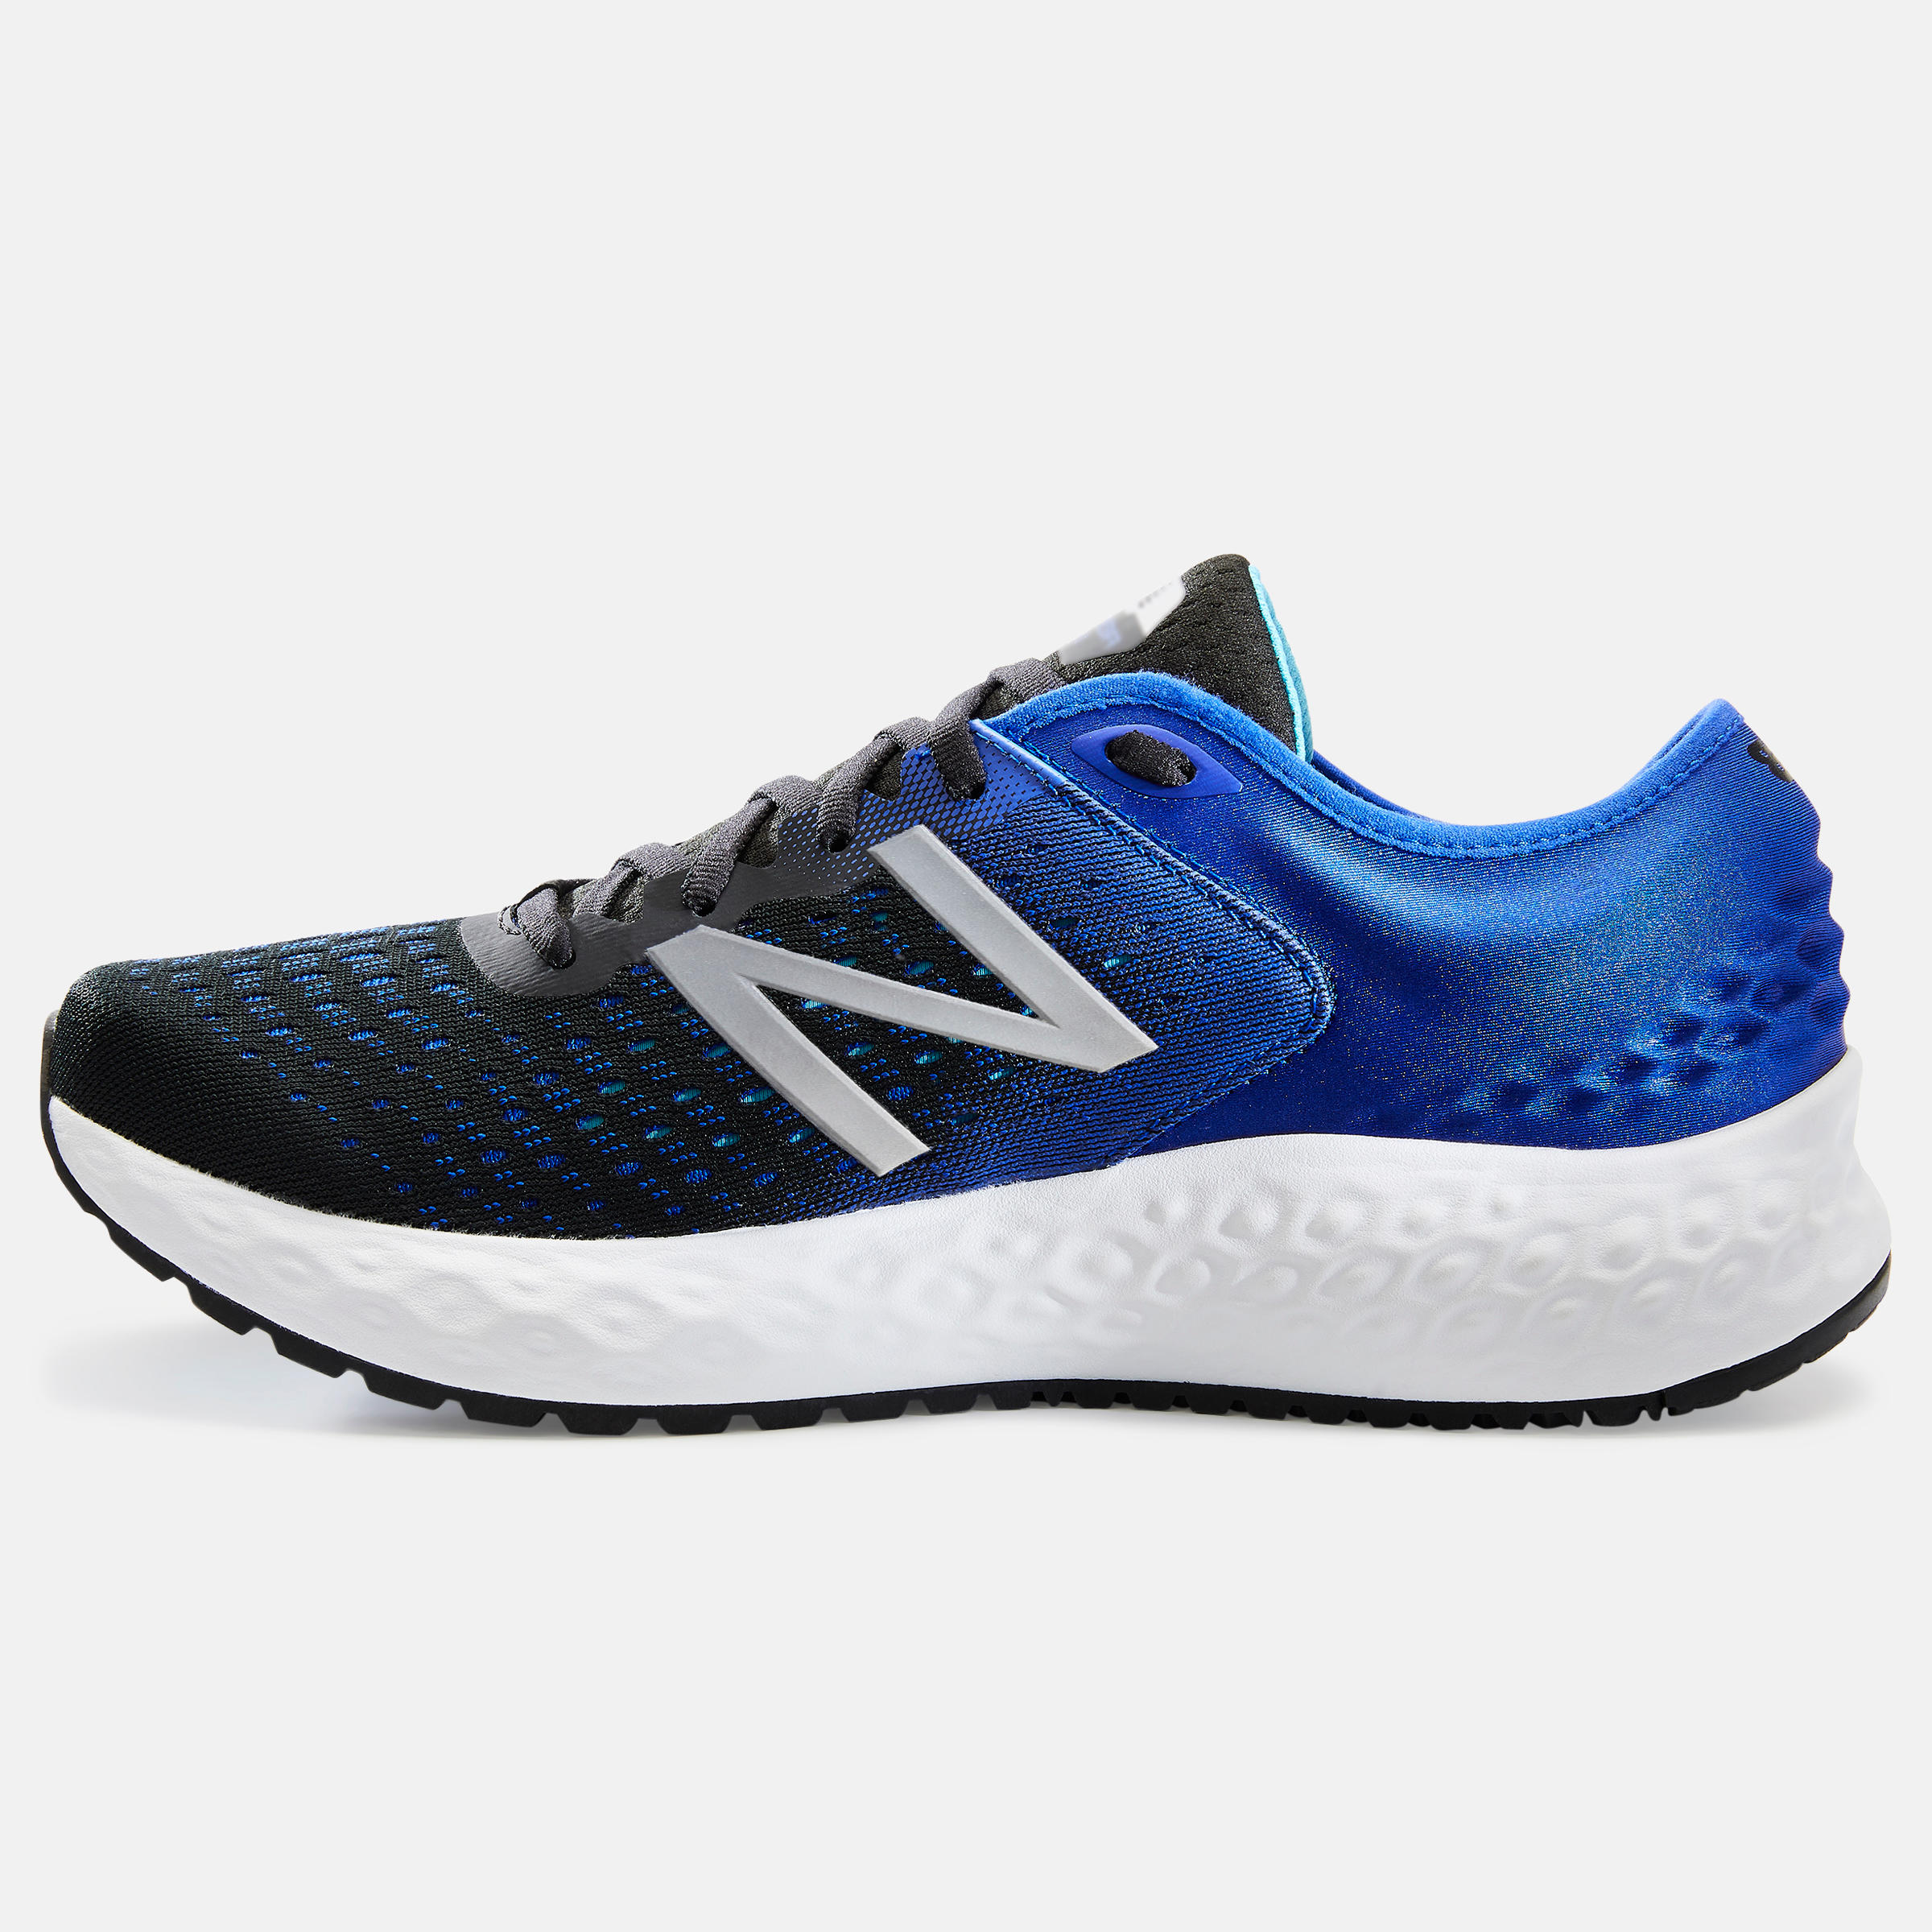 Men's Running Shoe NB 1080 - Blue NEW BALANCE - Decathlon